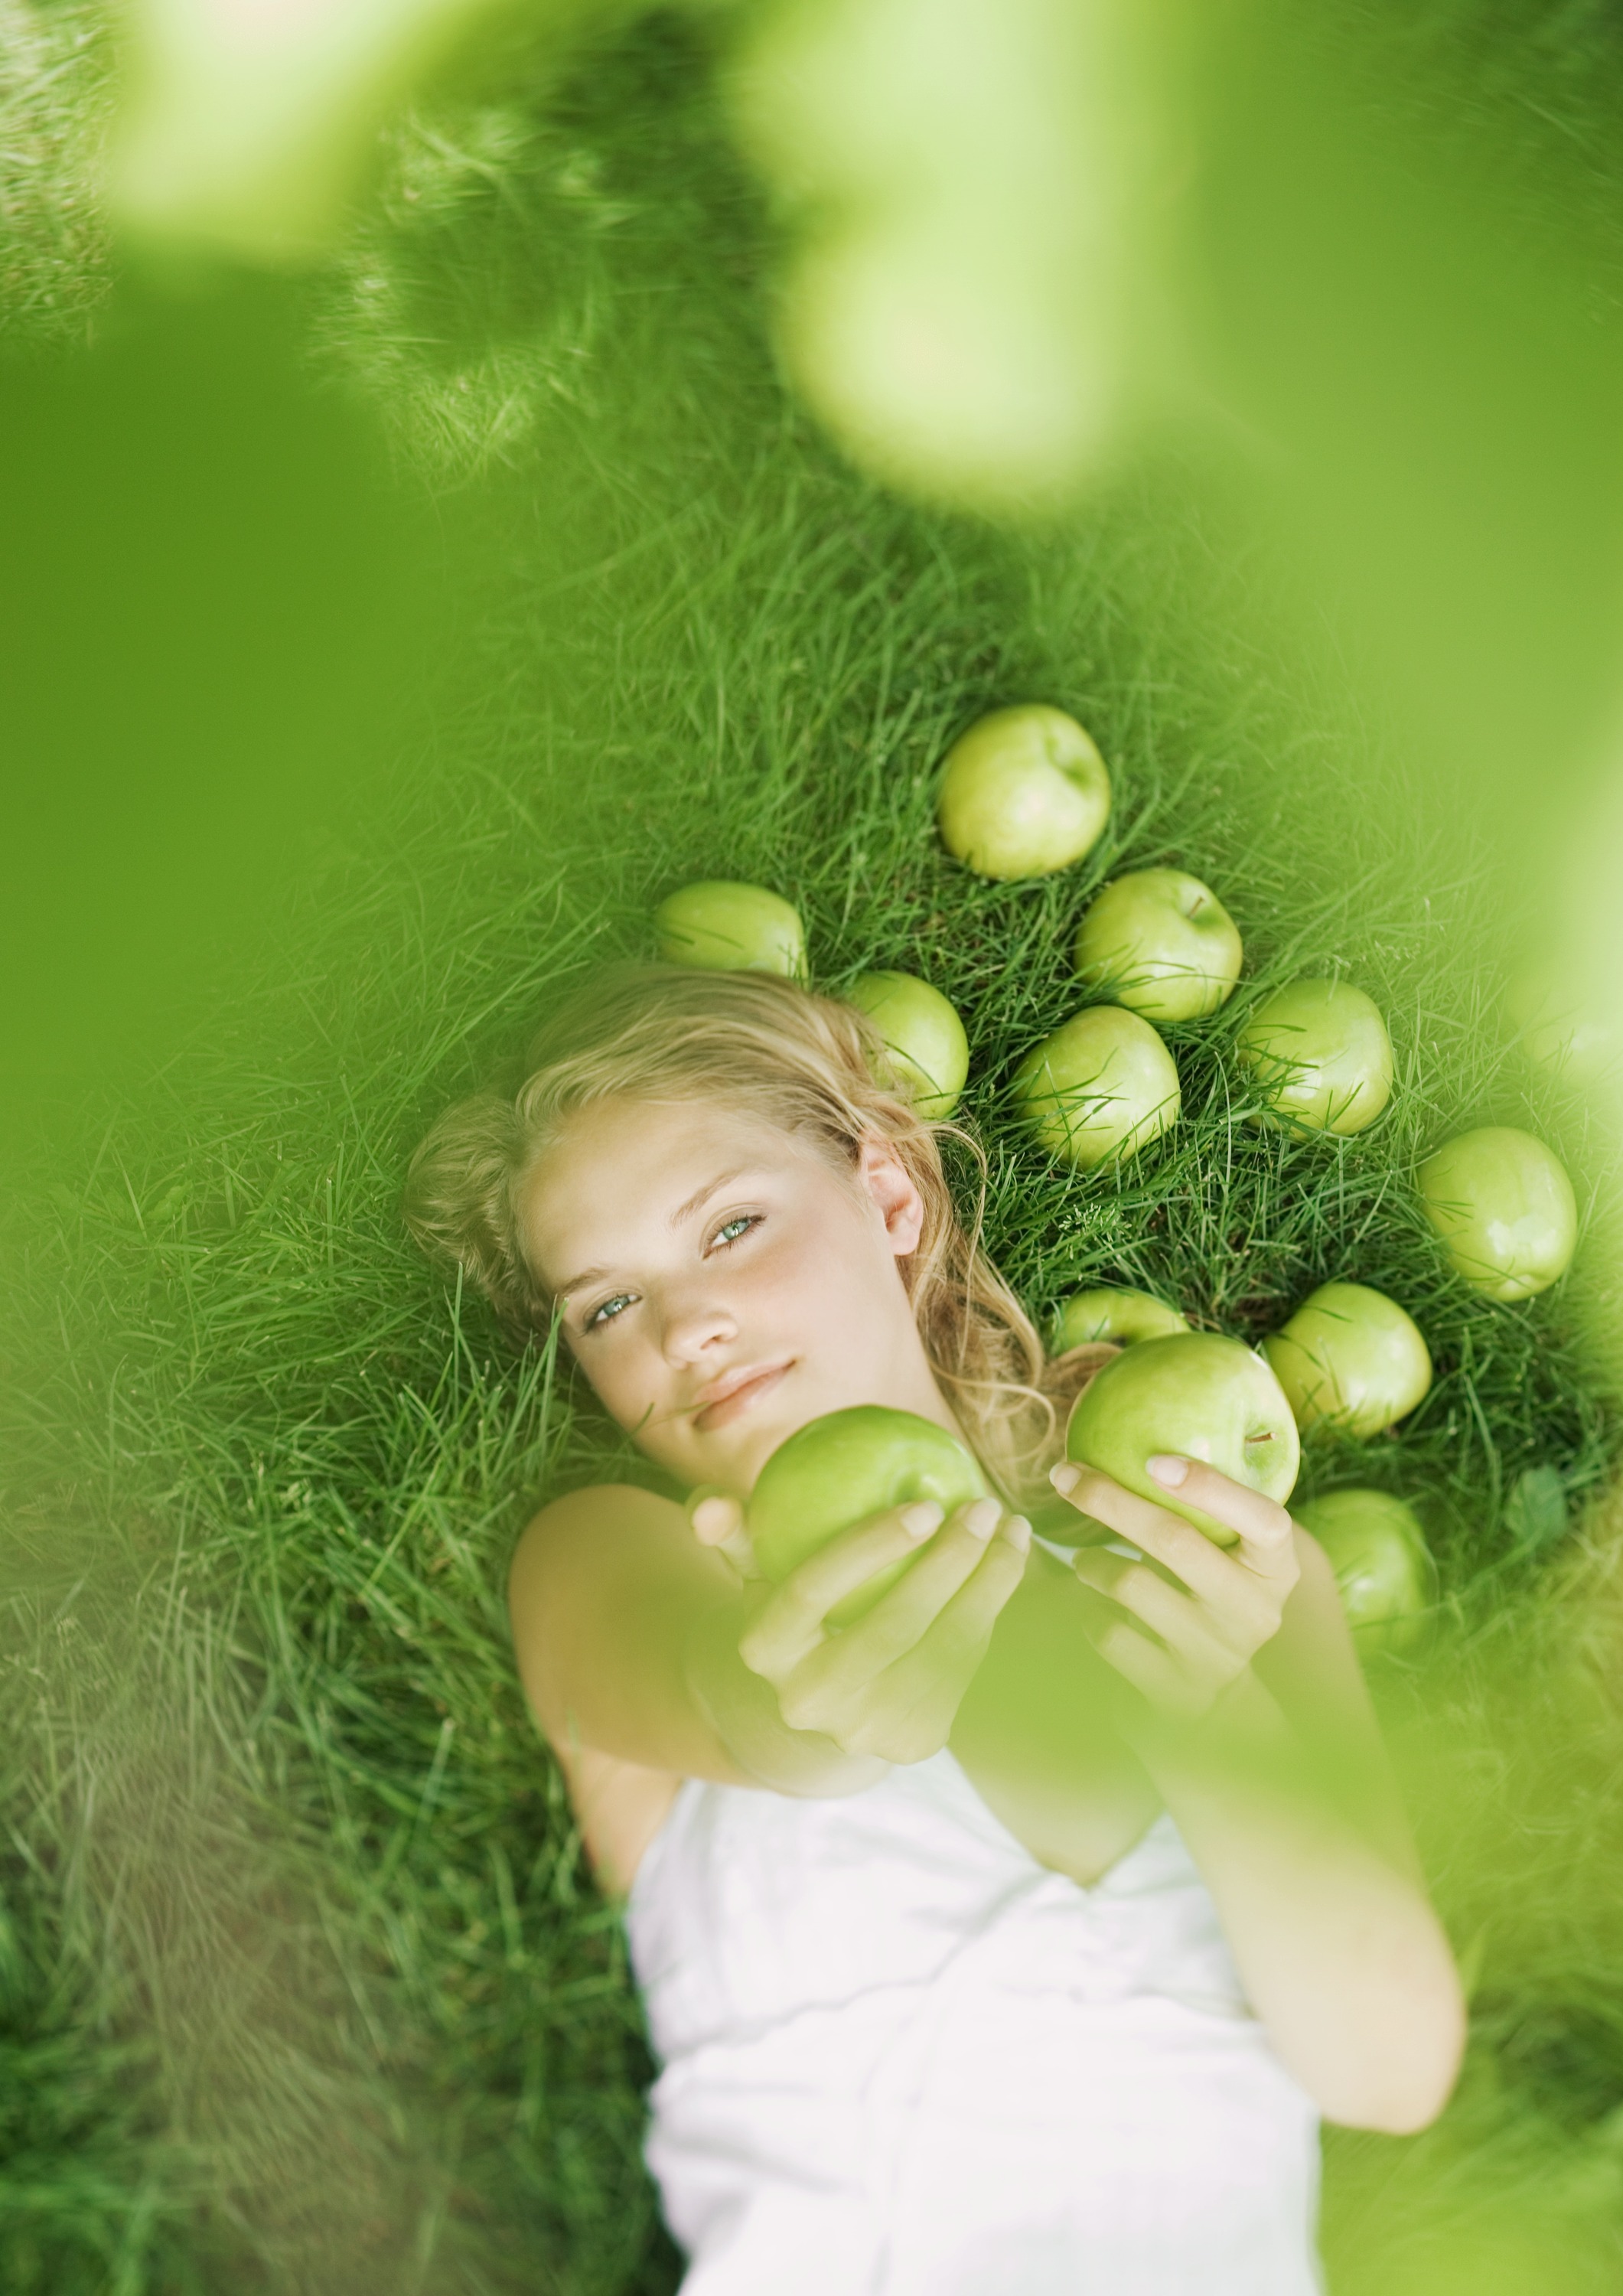 blondes, women, green apples, apples - desktop wallpaper